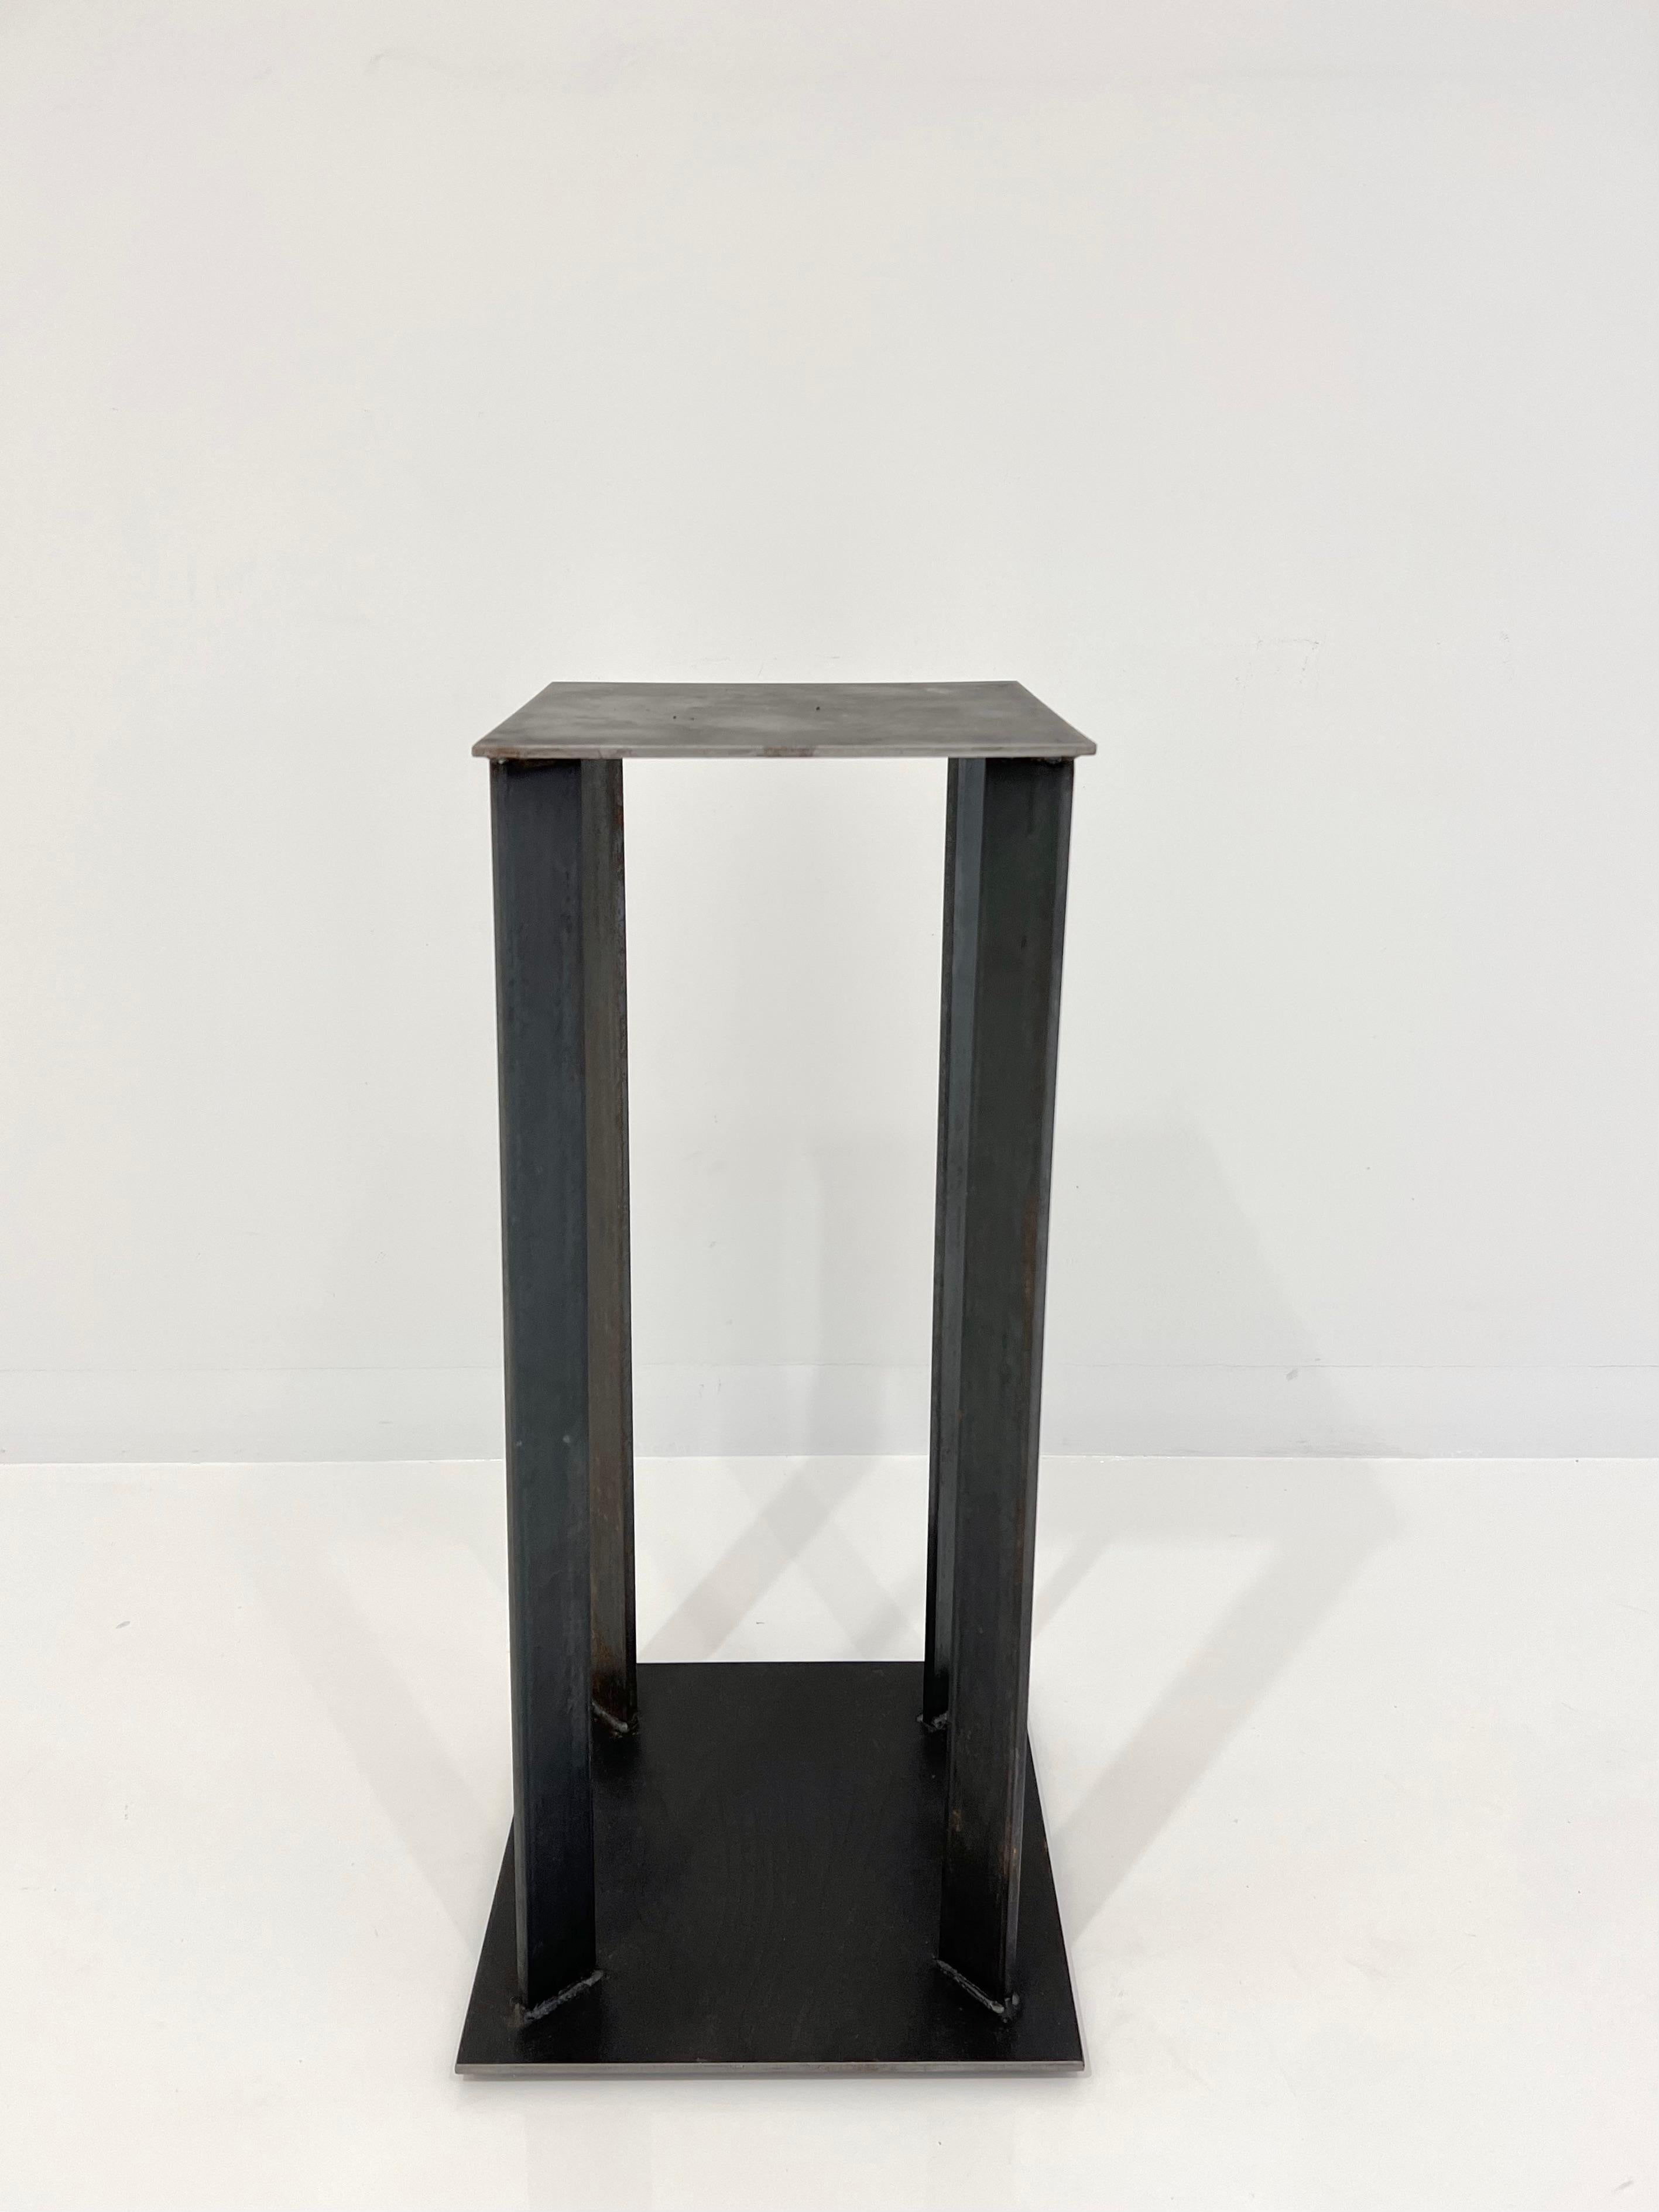 American Artist Made Industrial Steel Pedestal Stand by Robert Koch, USA, 2018 For Sale